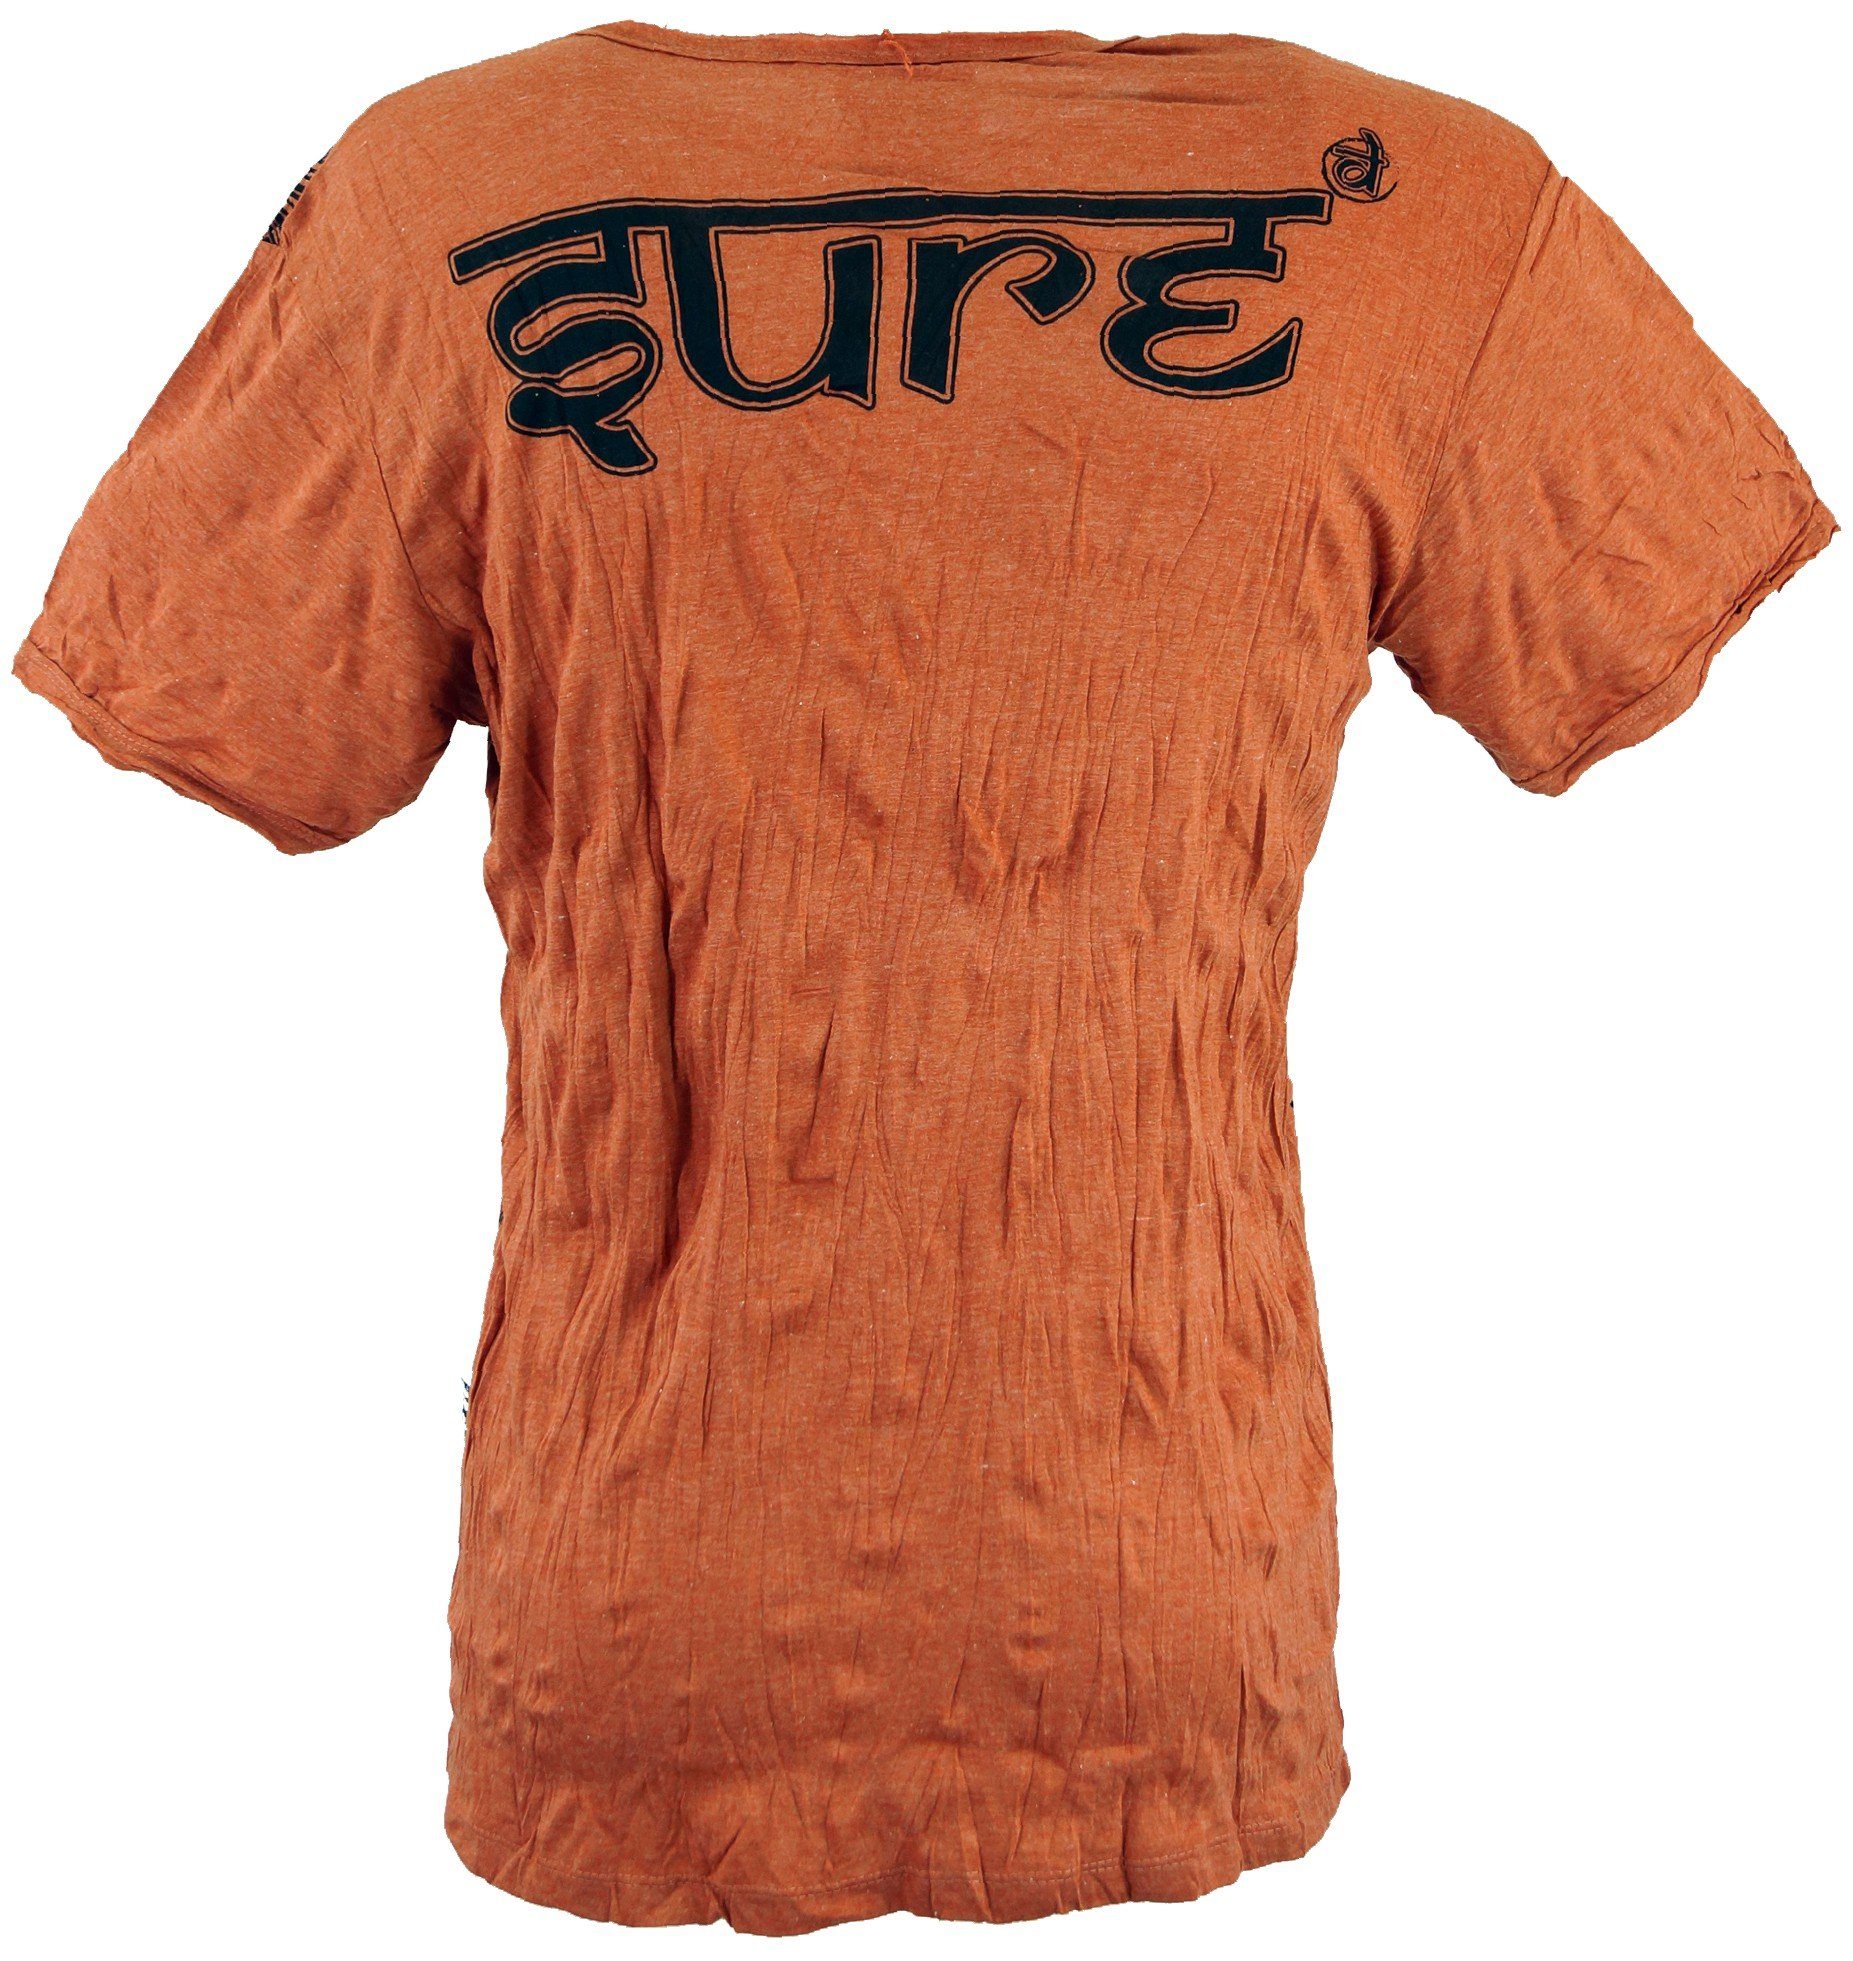 Sure - Style, Ganesh Goa rostorange Guru-Shop T-Shirt Bekleidung alternative Festival, T-Shirt